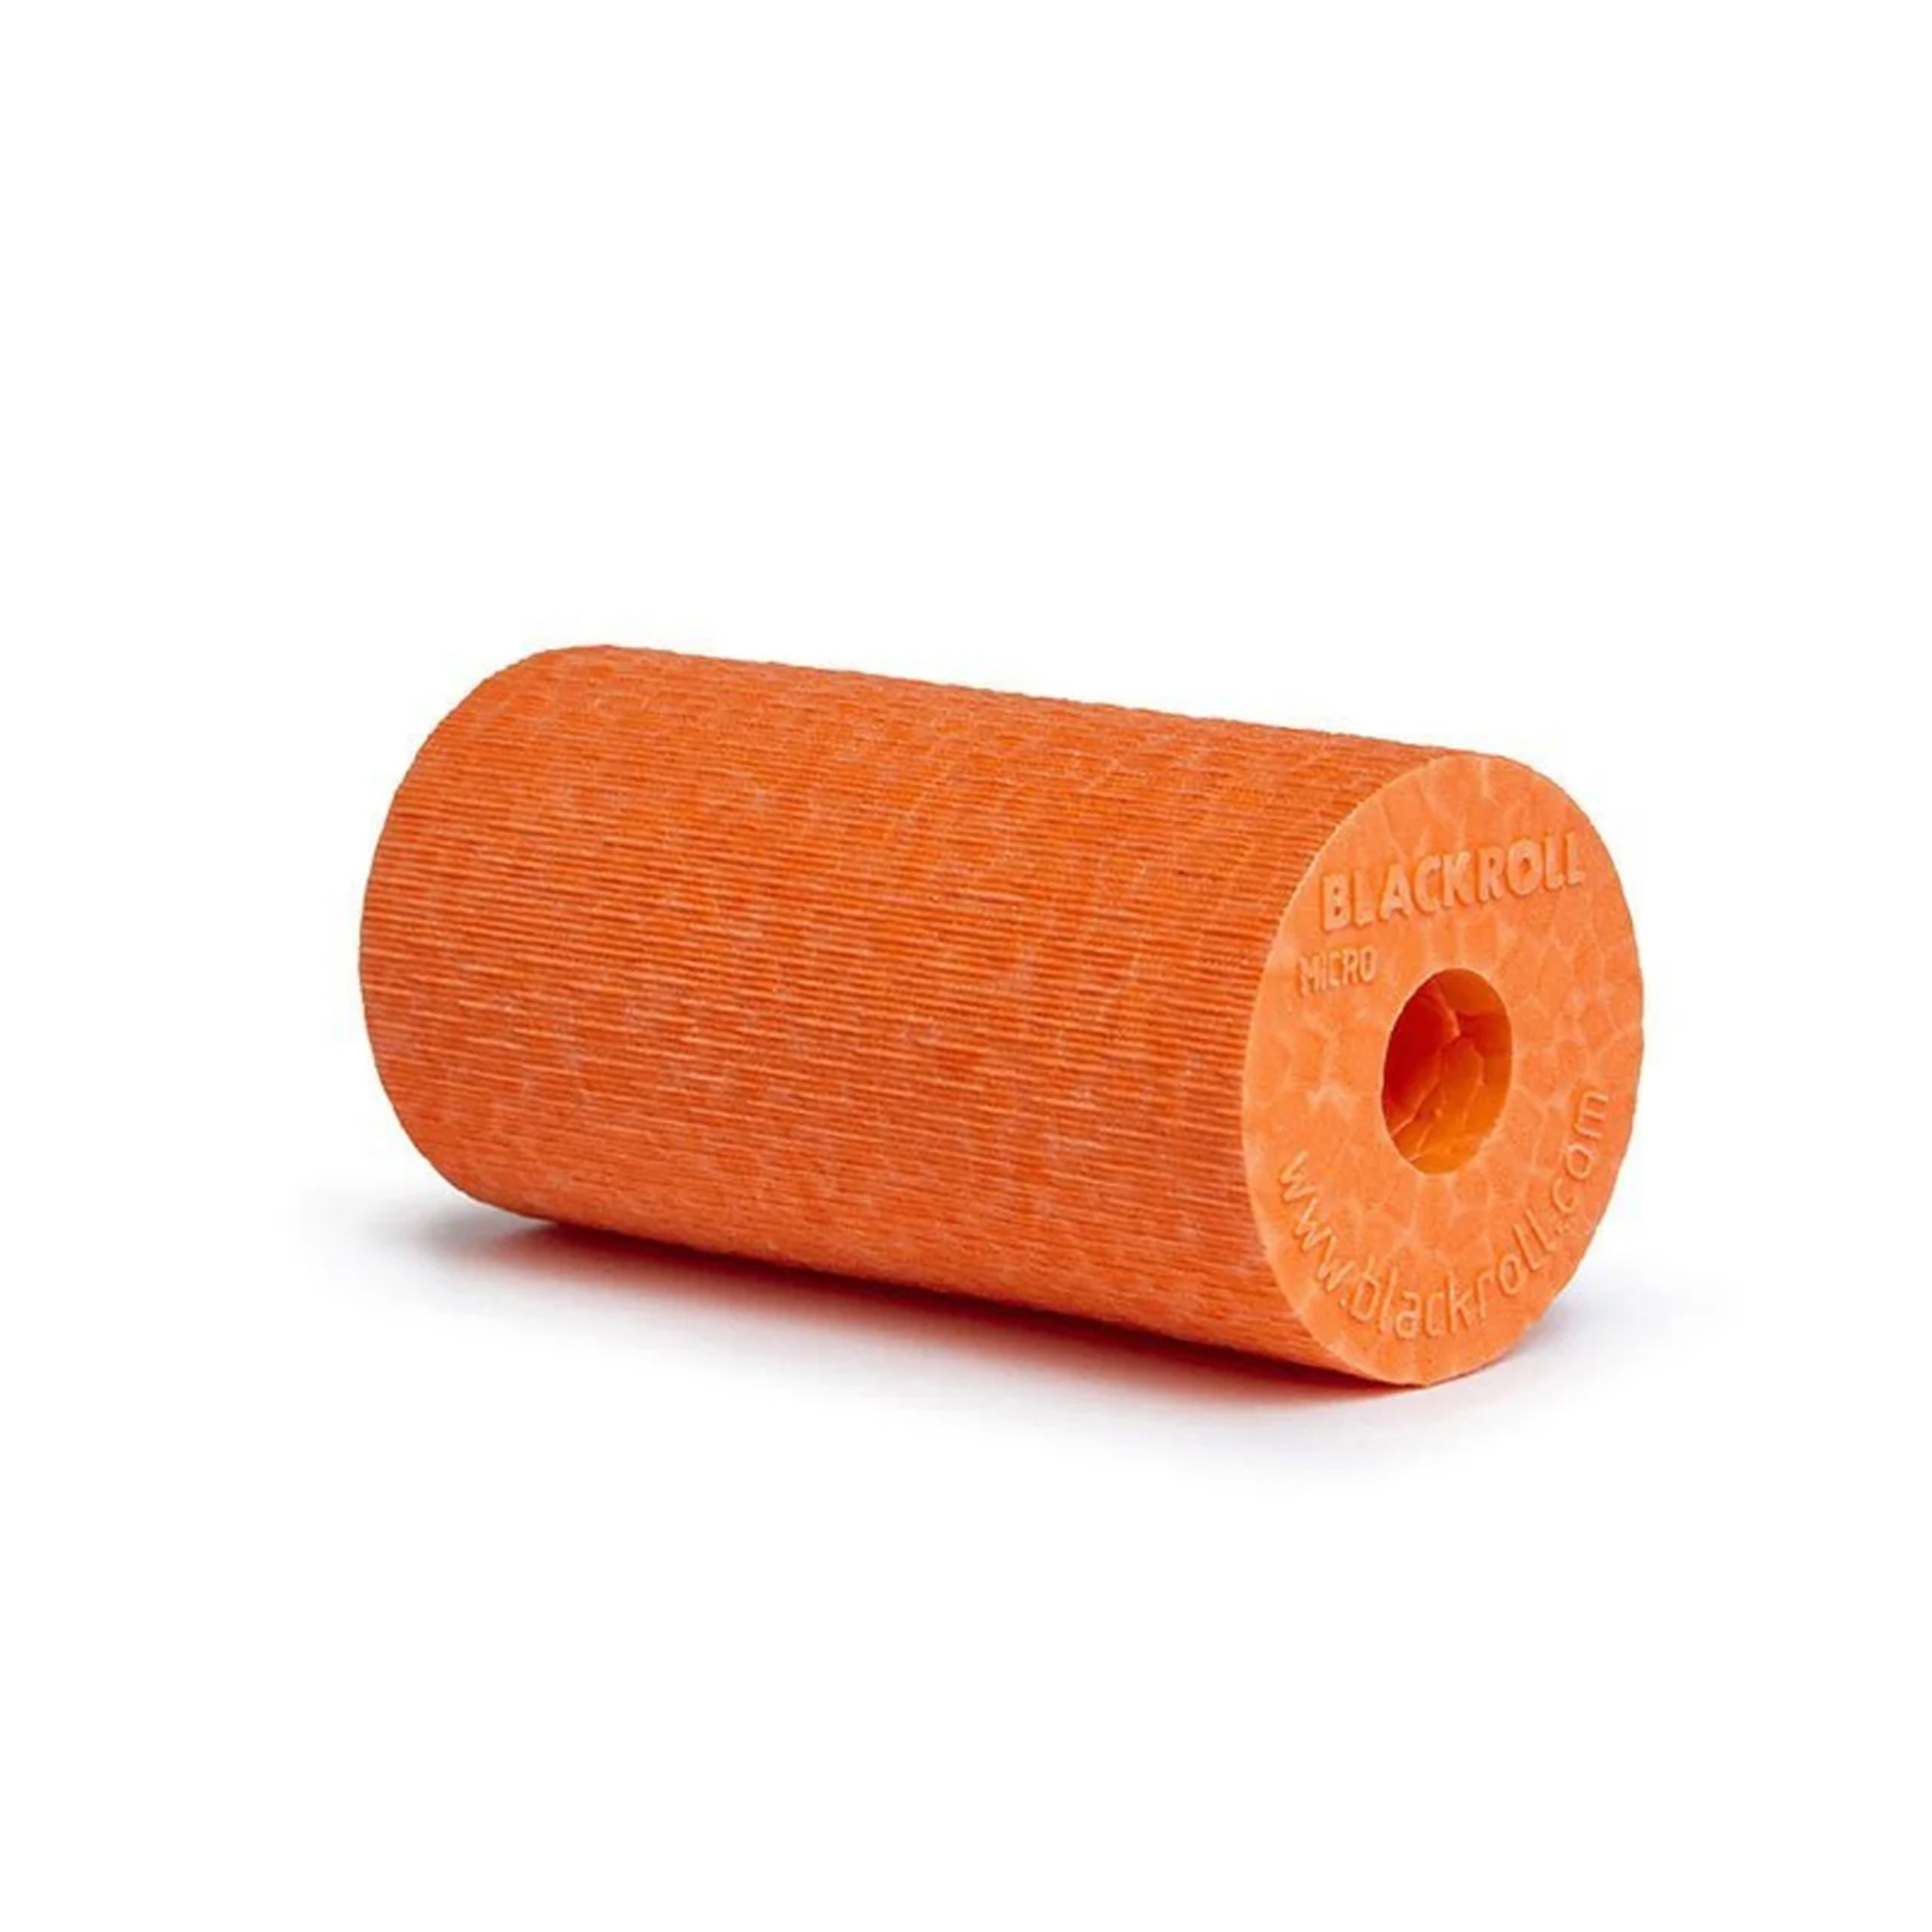 Blackroll Micro Foam Roller Orange - 6x3 cm thumbnail